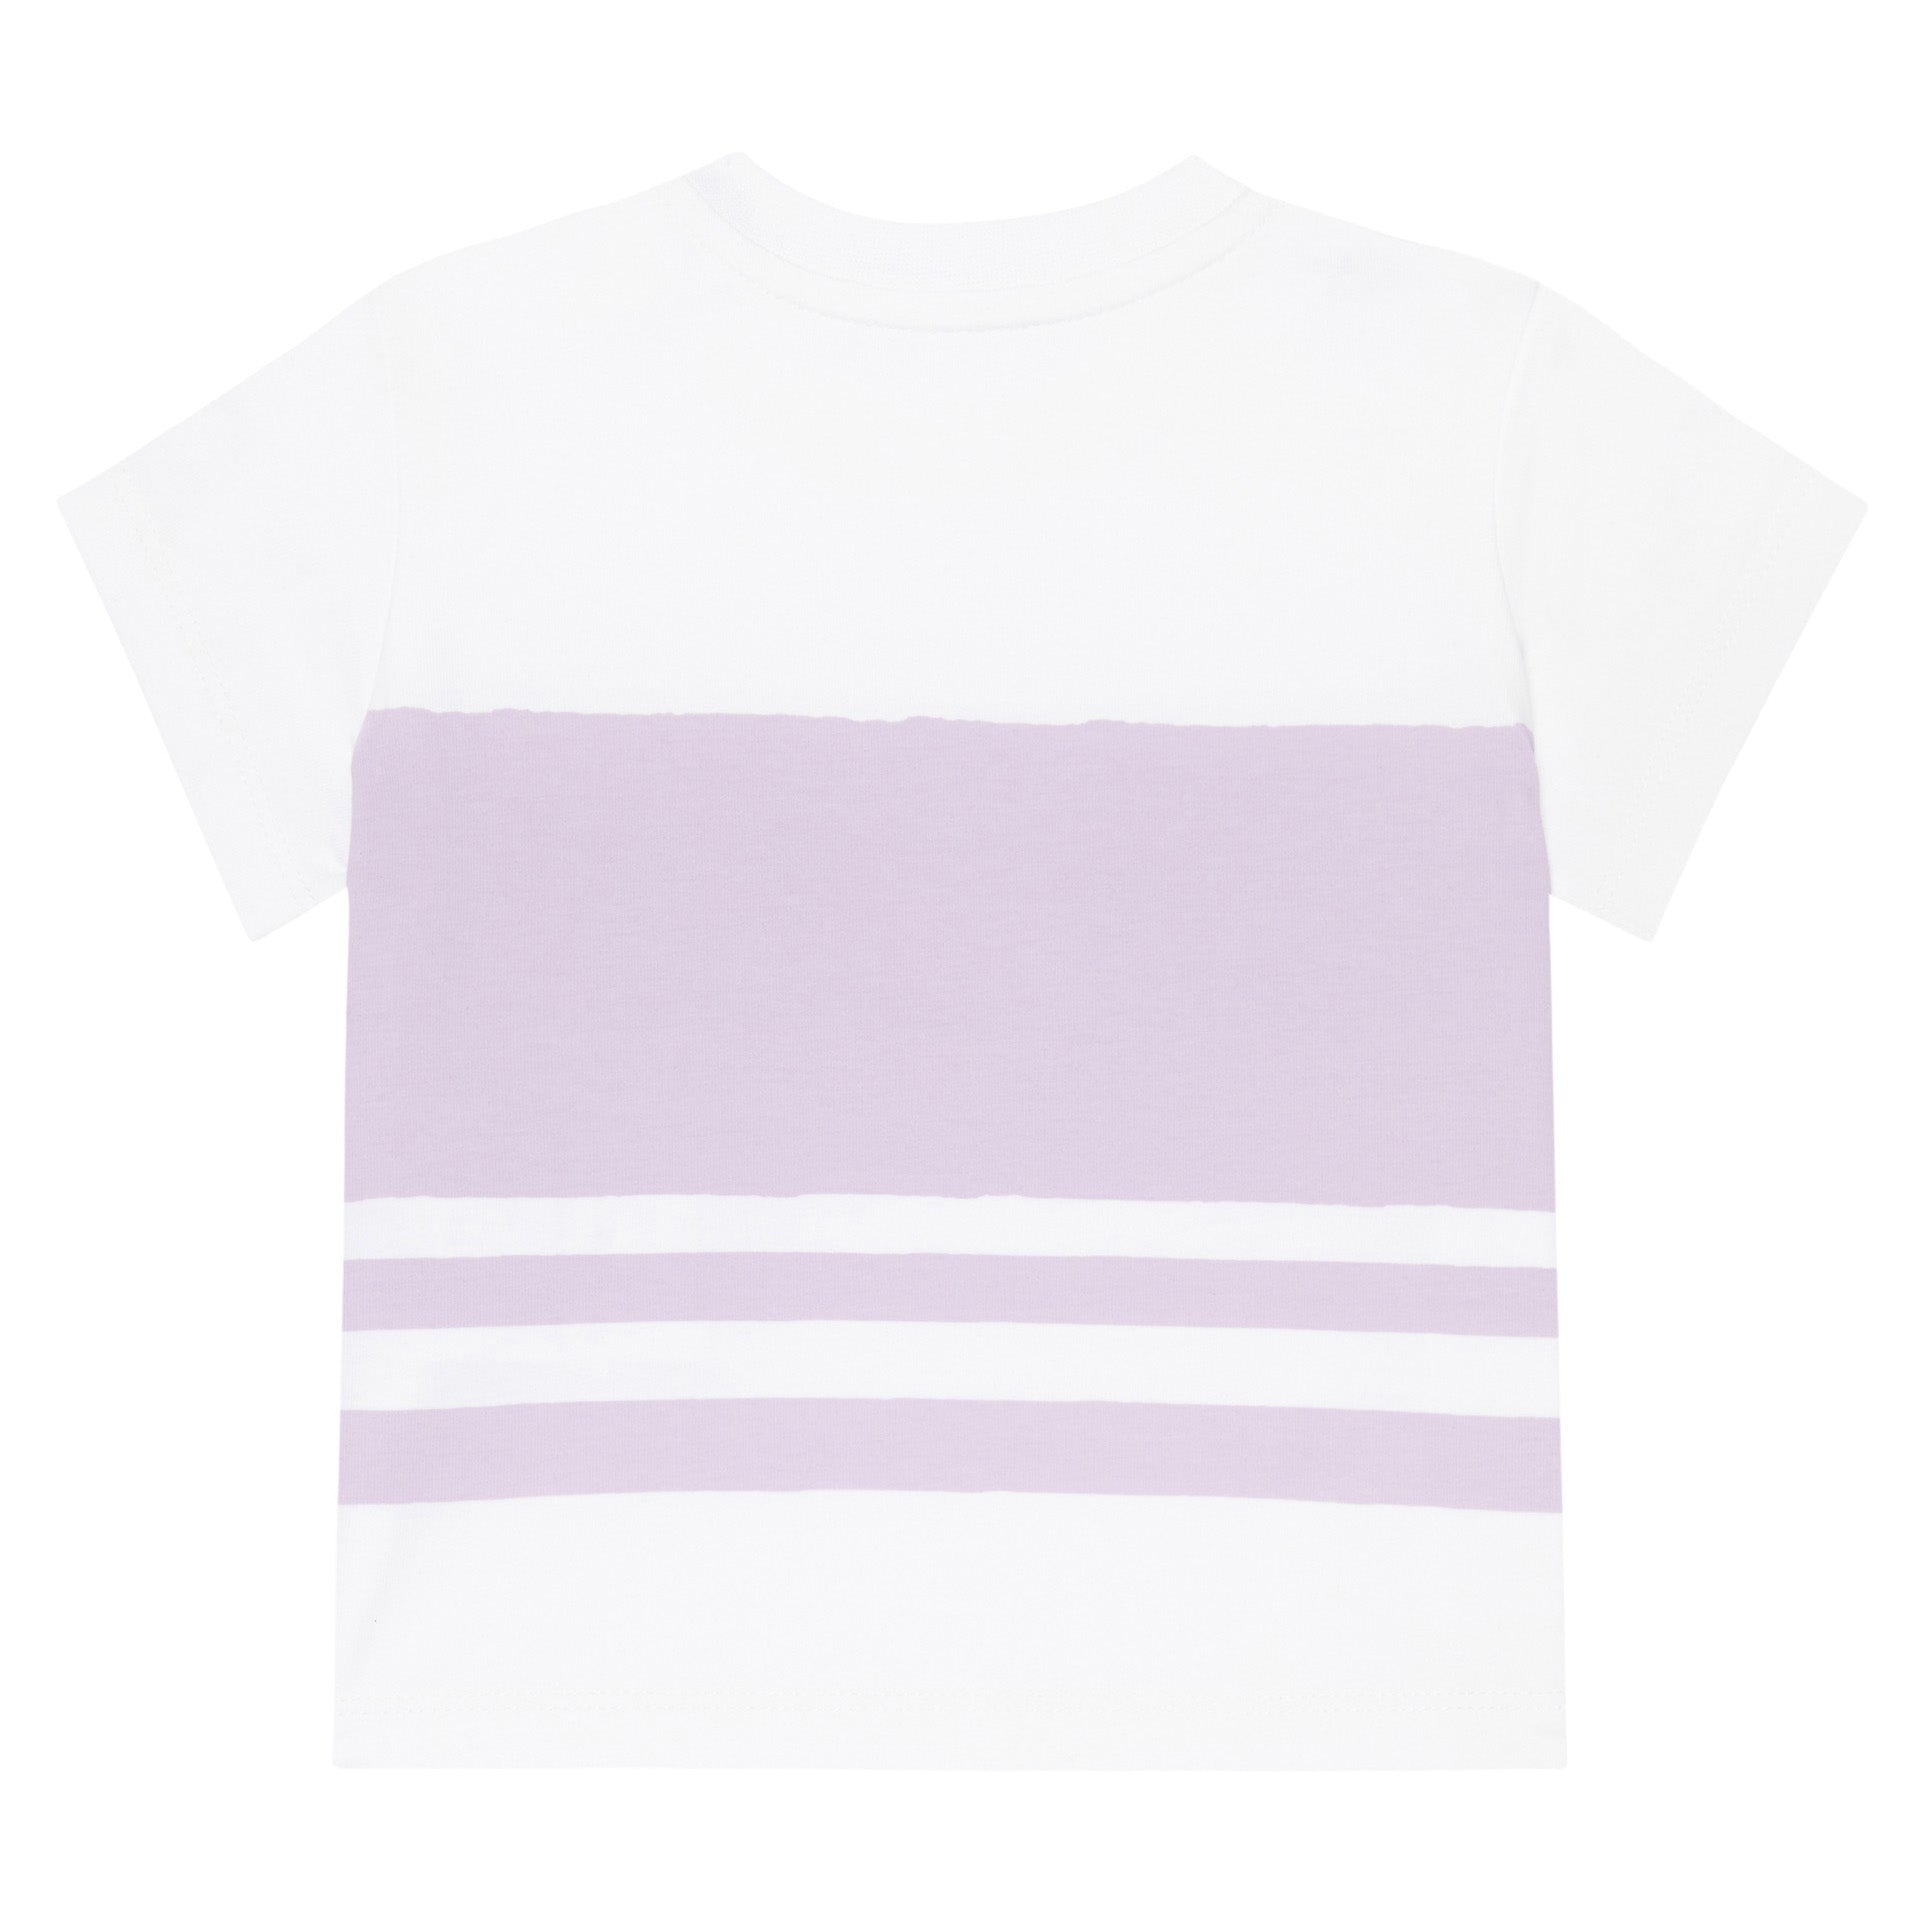 Baby Girls Purple Logo Cotton T-Shirt